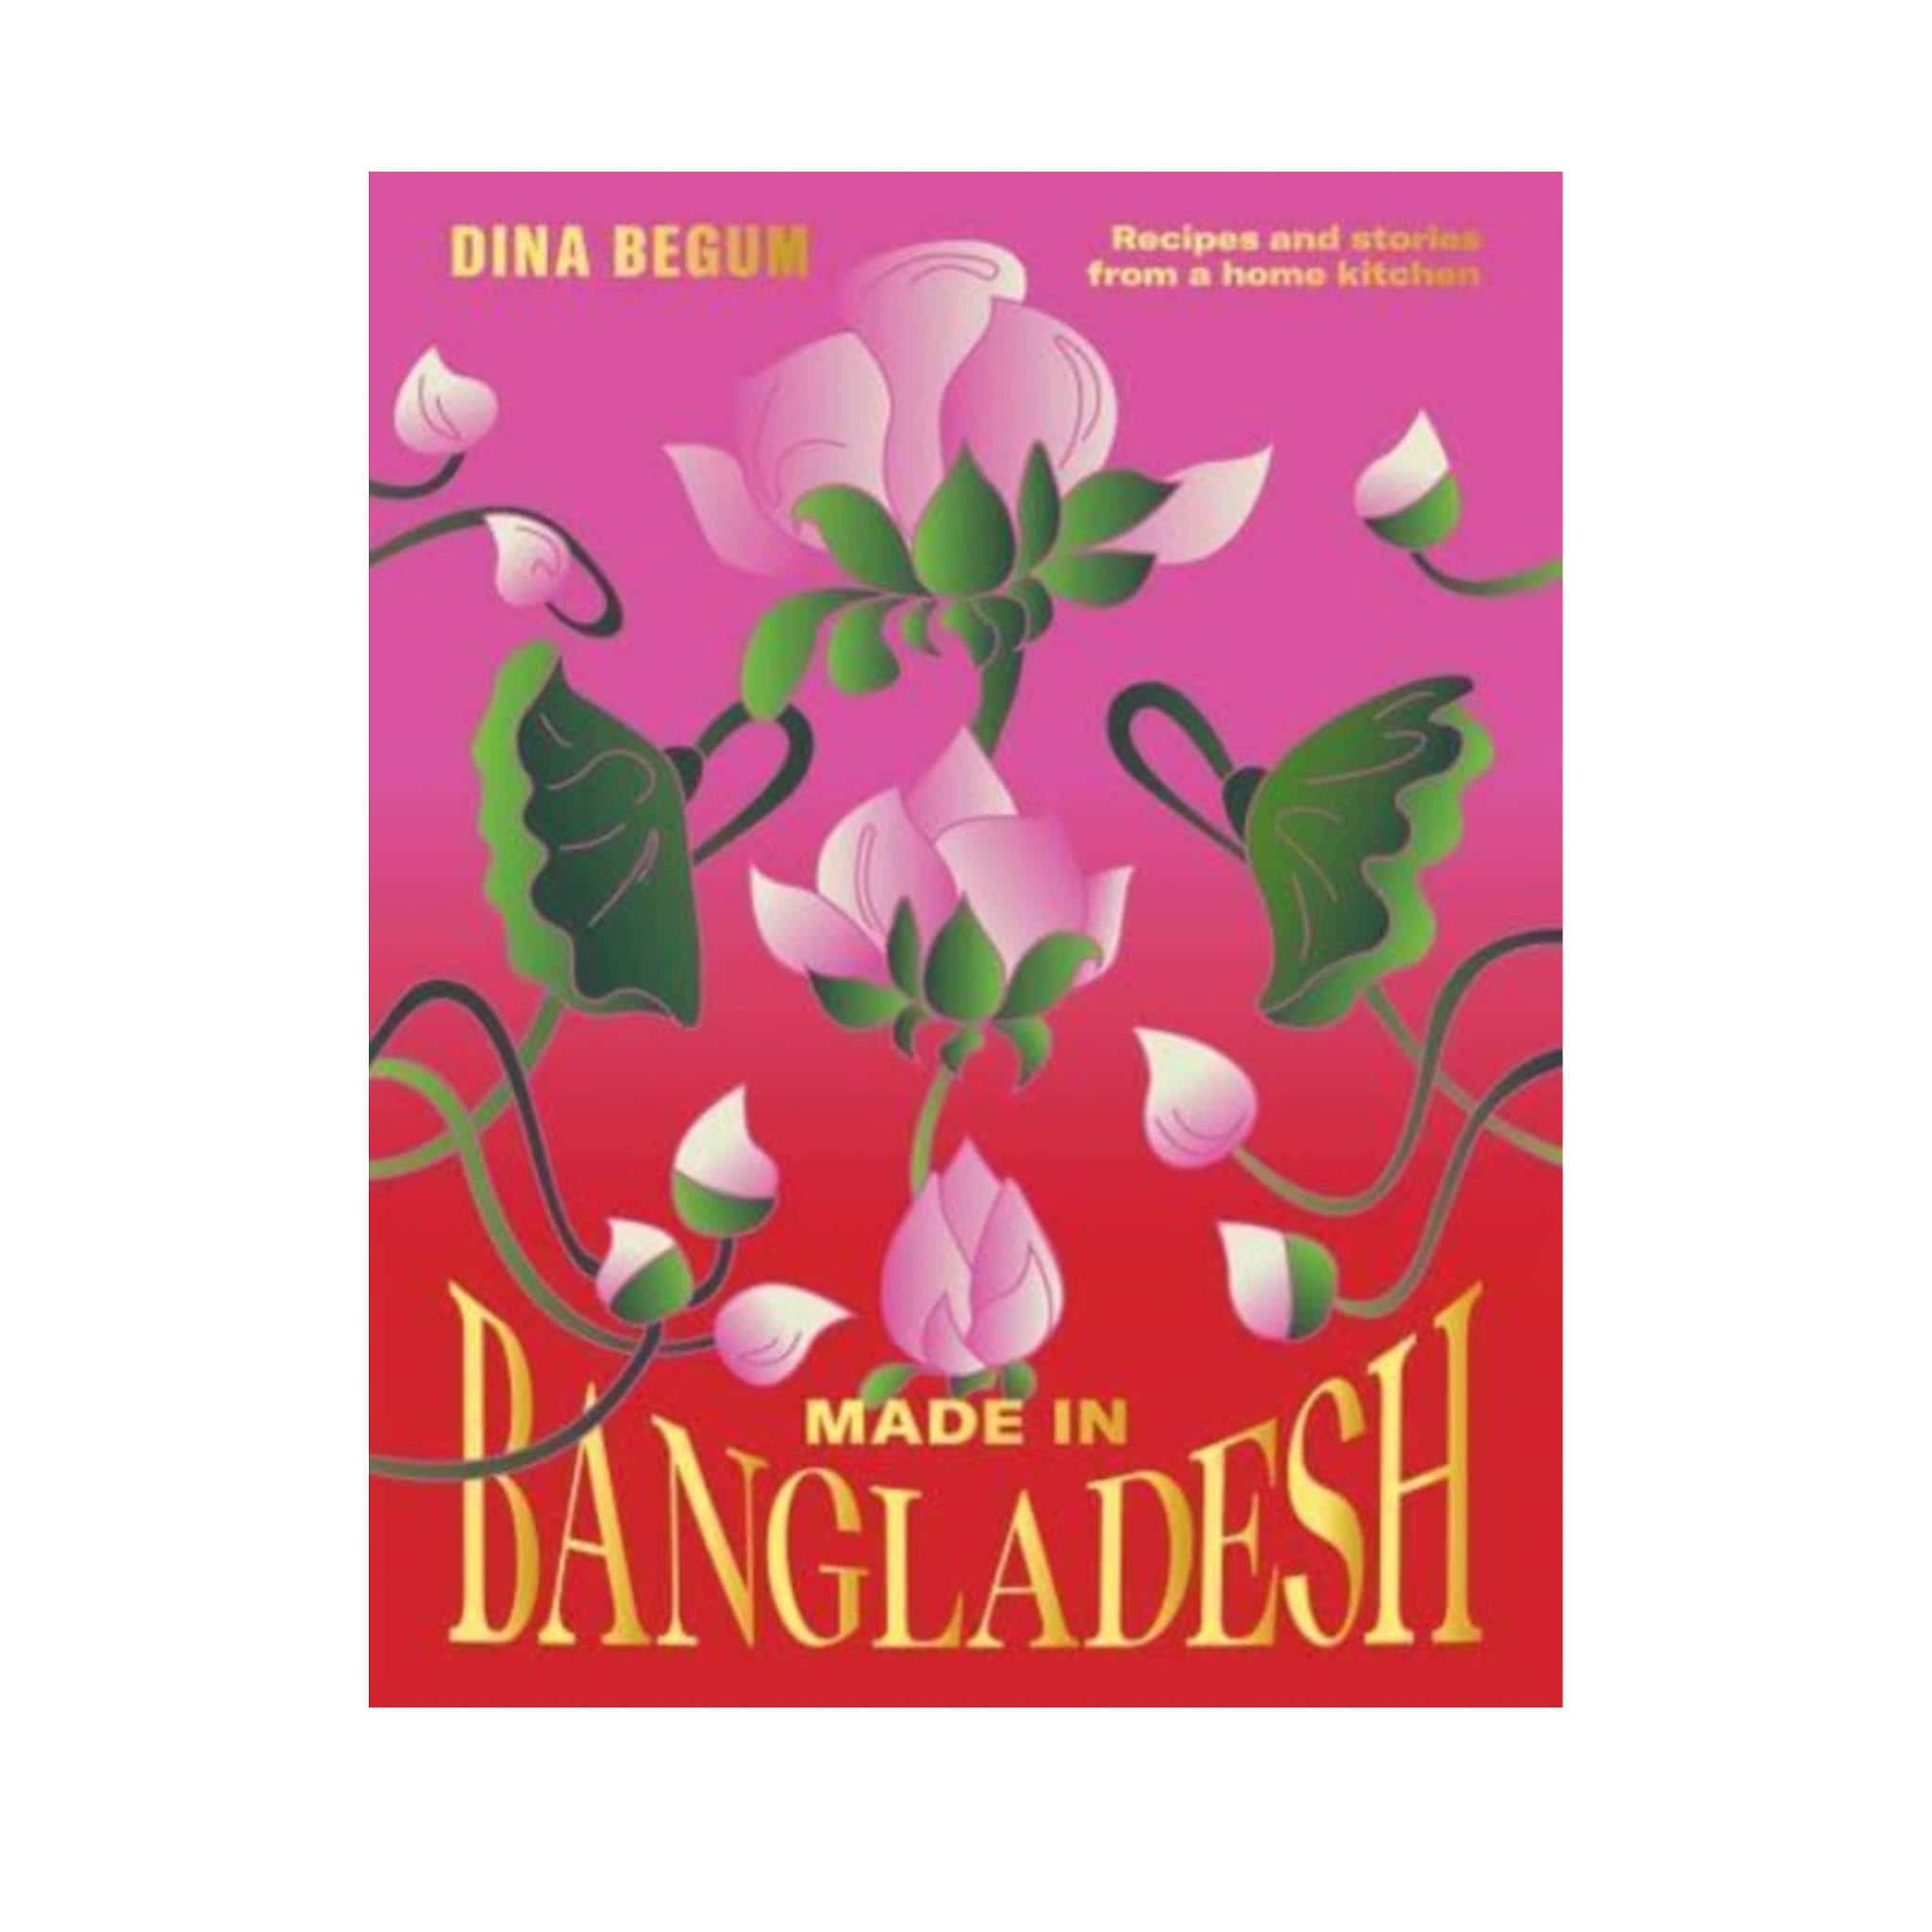 Made in Bangladesh, by Dina Begum